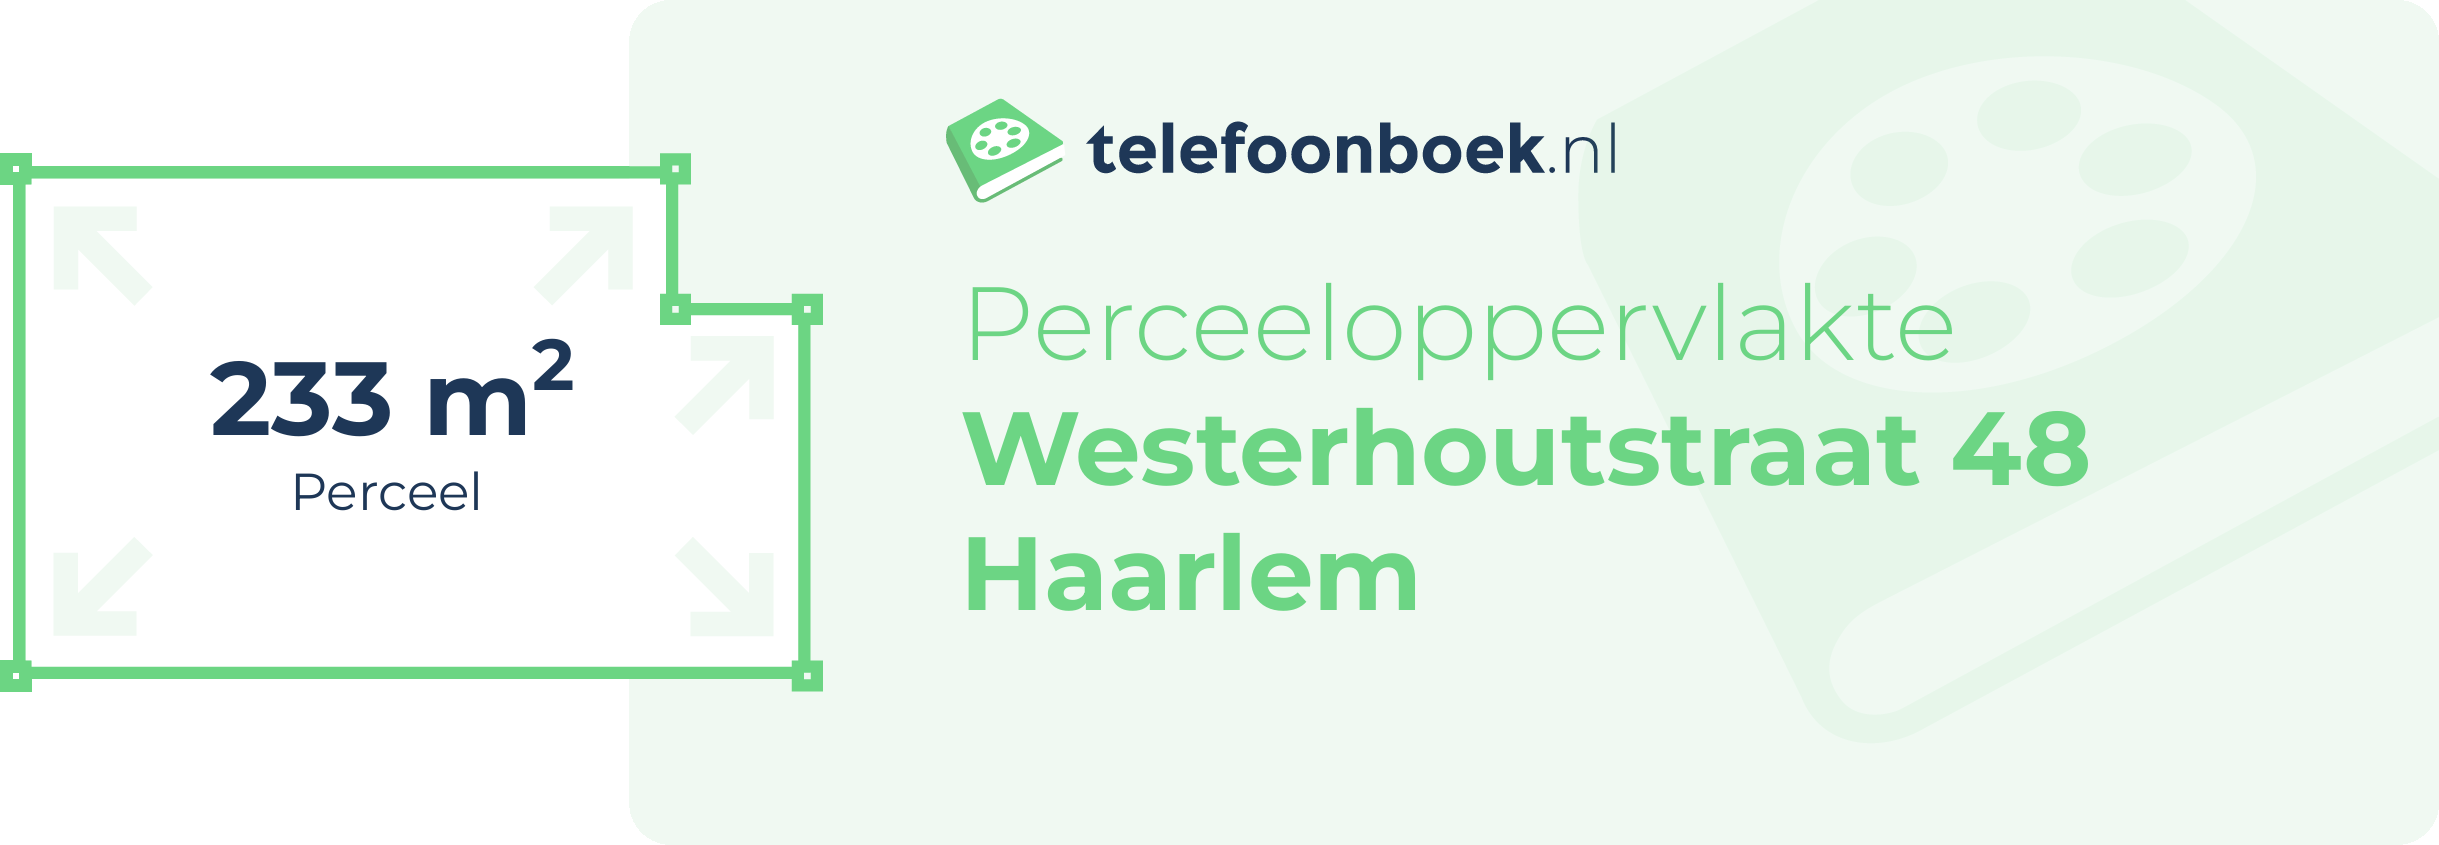 Perceeloppervlakte Westerhoutstraat 48 Haarlem